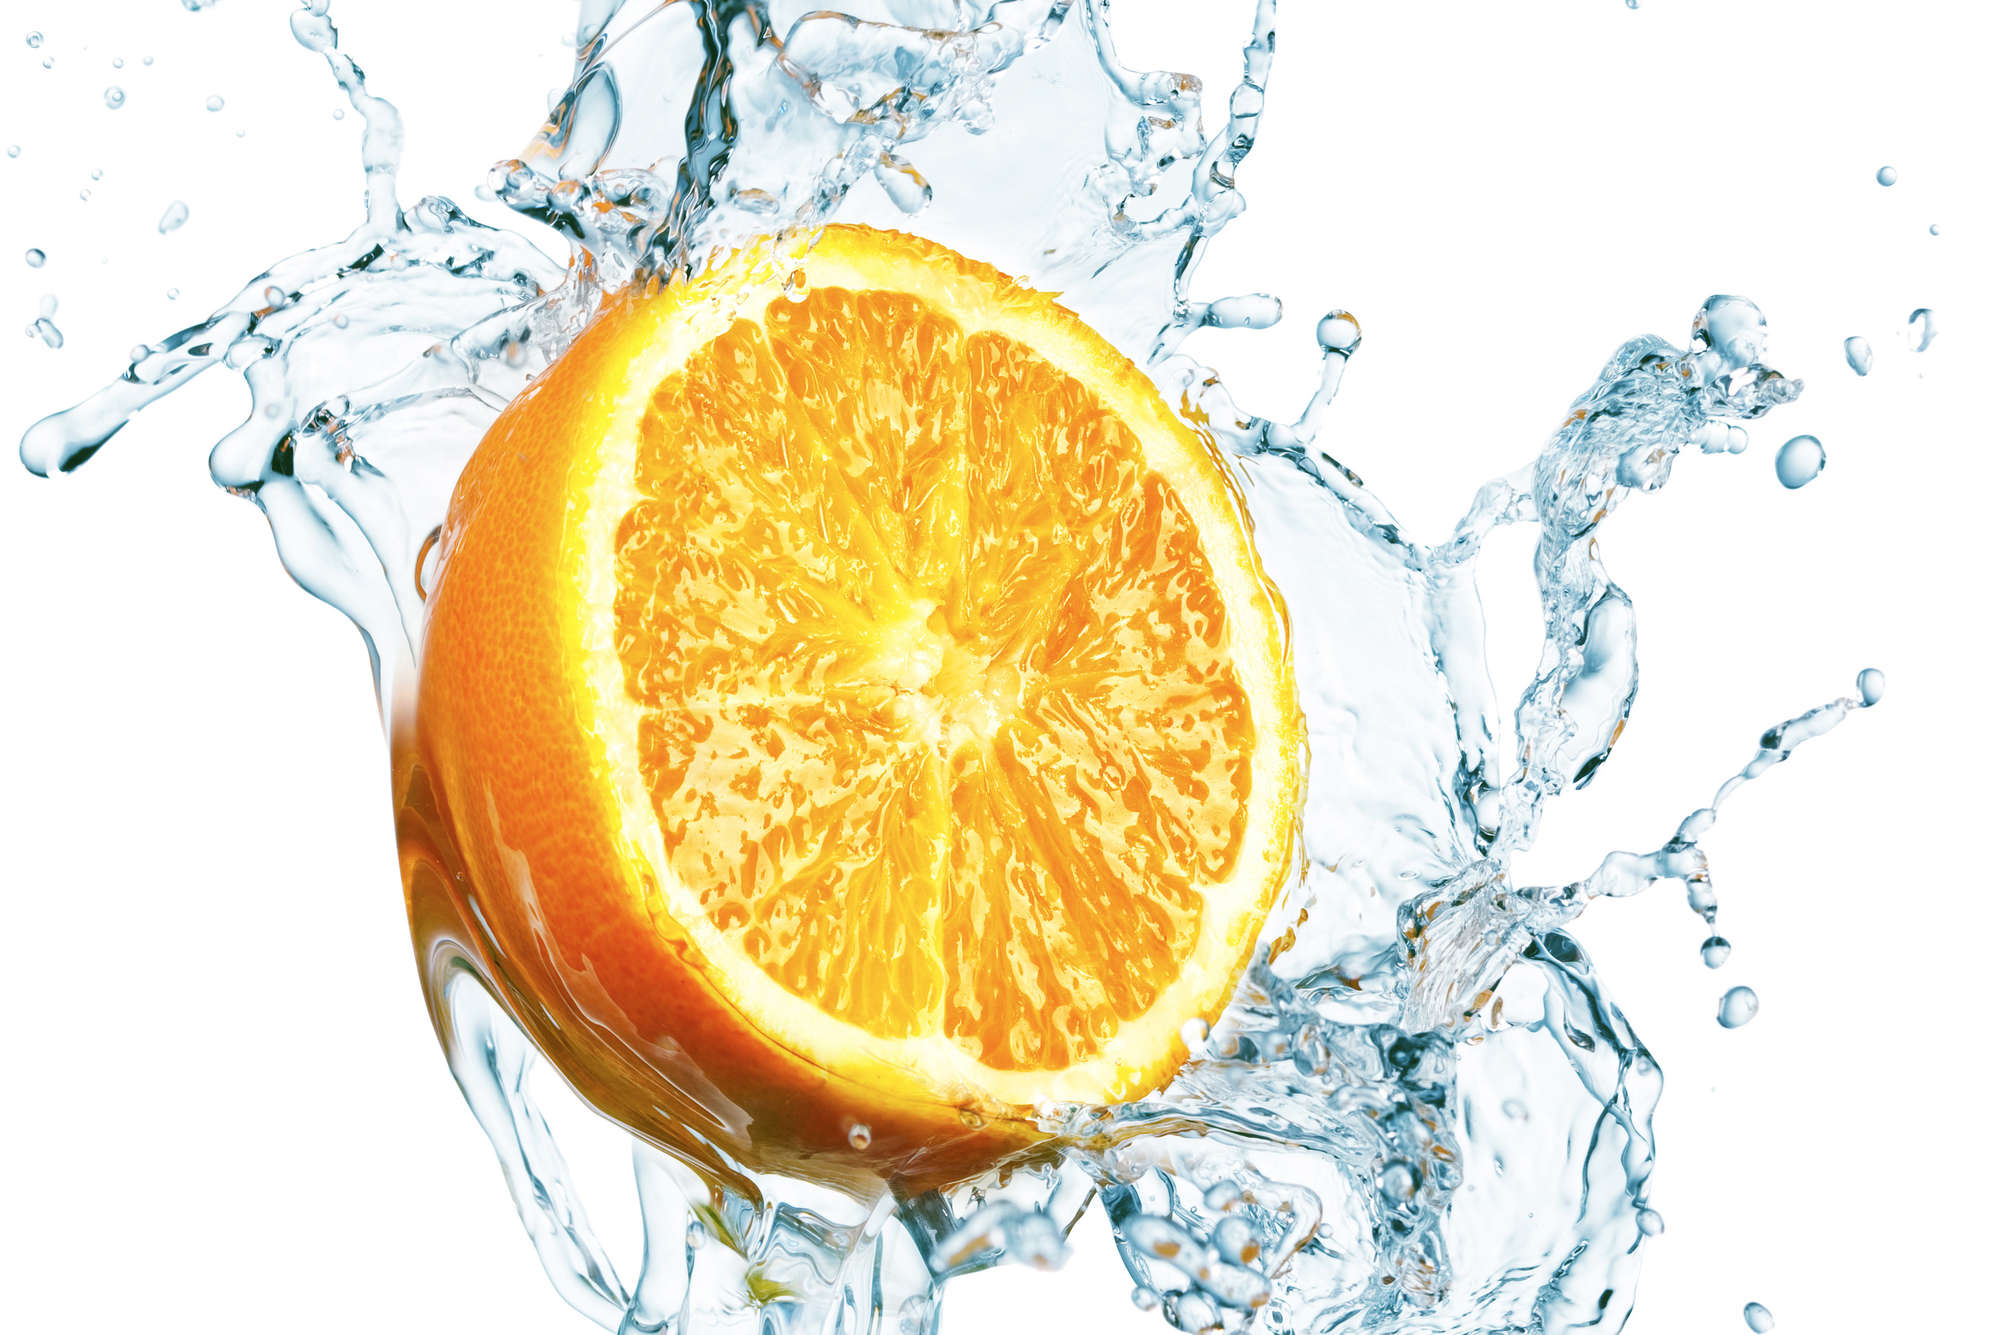             Fototapete Orange im Wasser – Premium Glattvlies
        